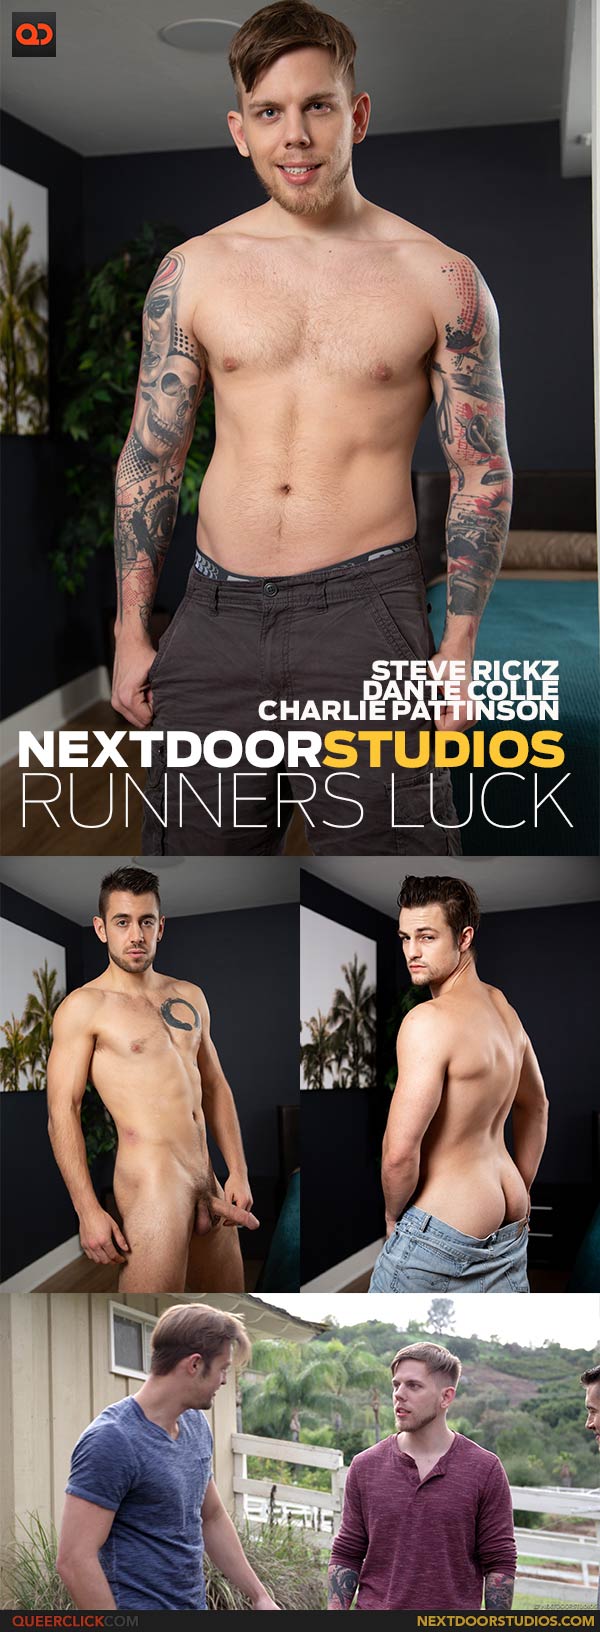 Next Door Studios: Charlie Pattinson, Dante Colle and Steve Rickz